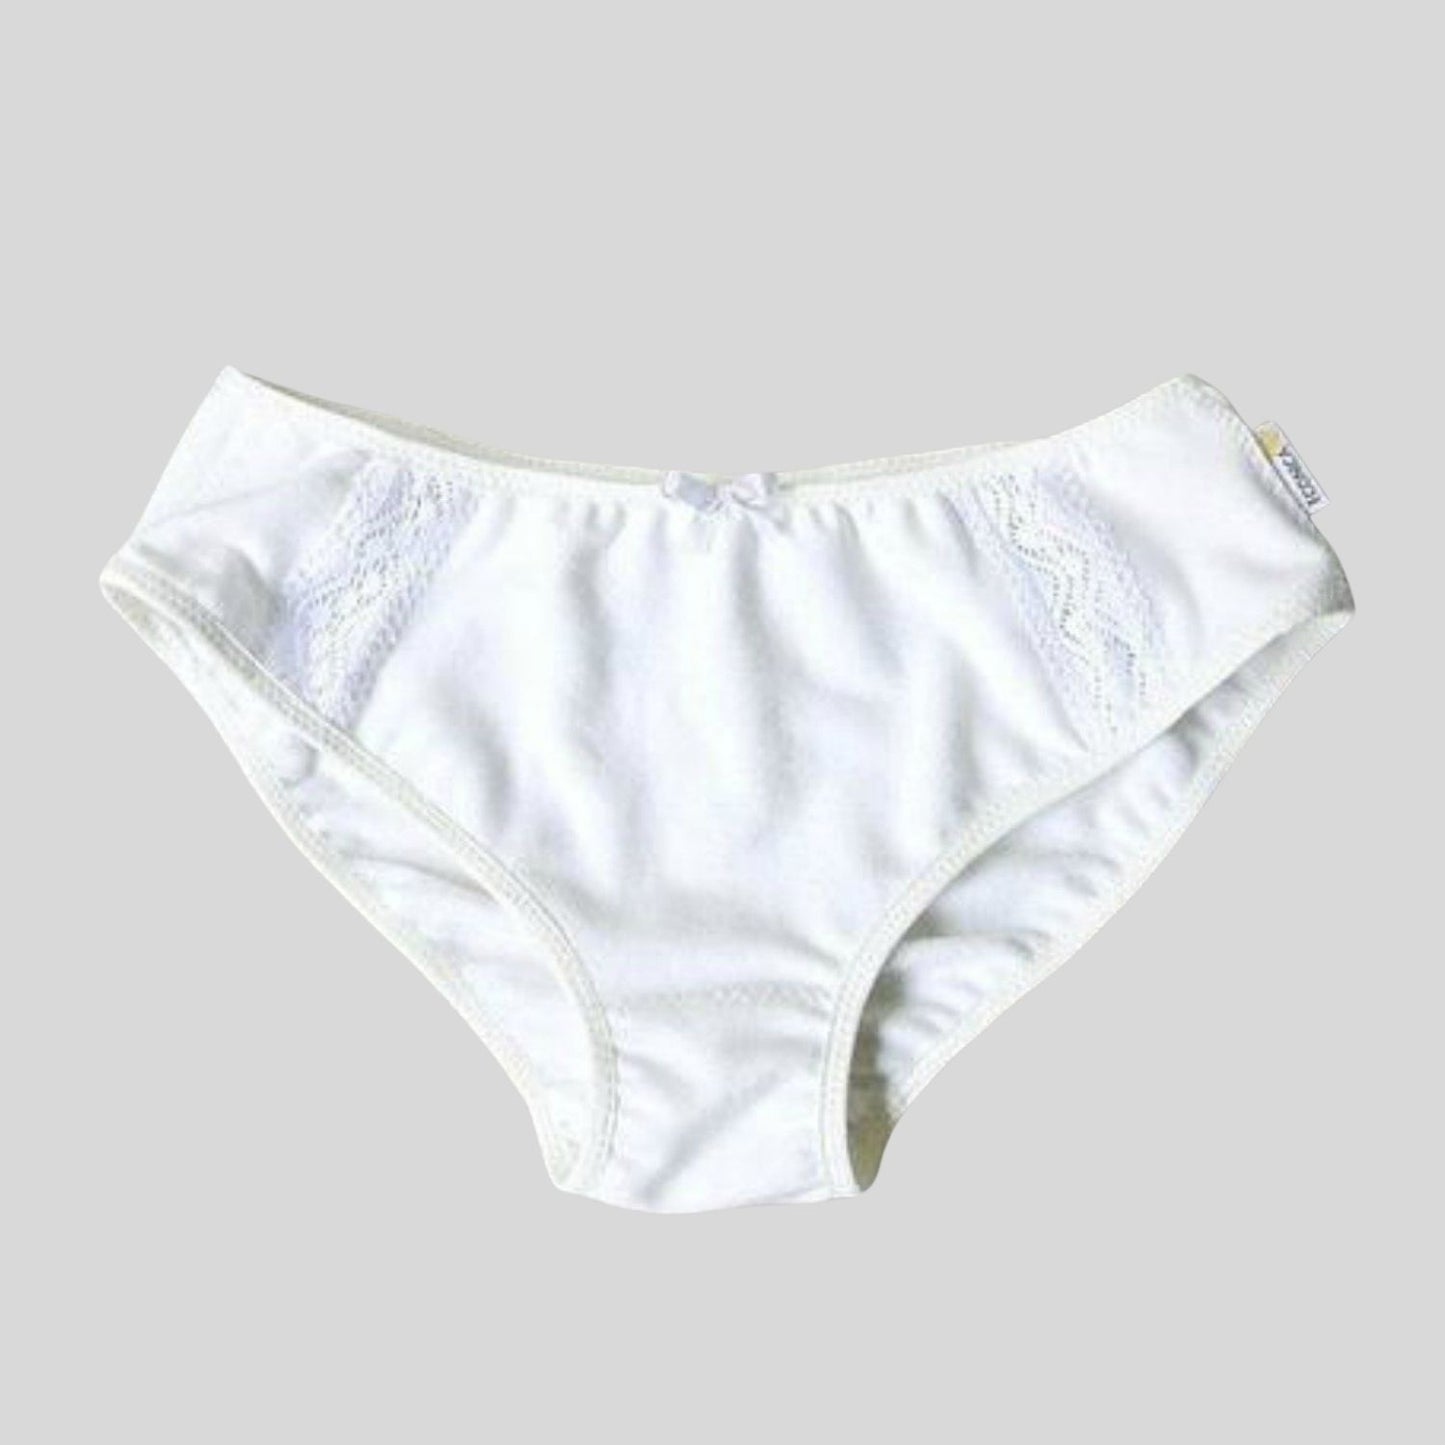 Buy best organic cotton white panties | Made in Canada women's underwear shop 